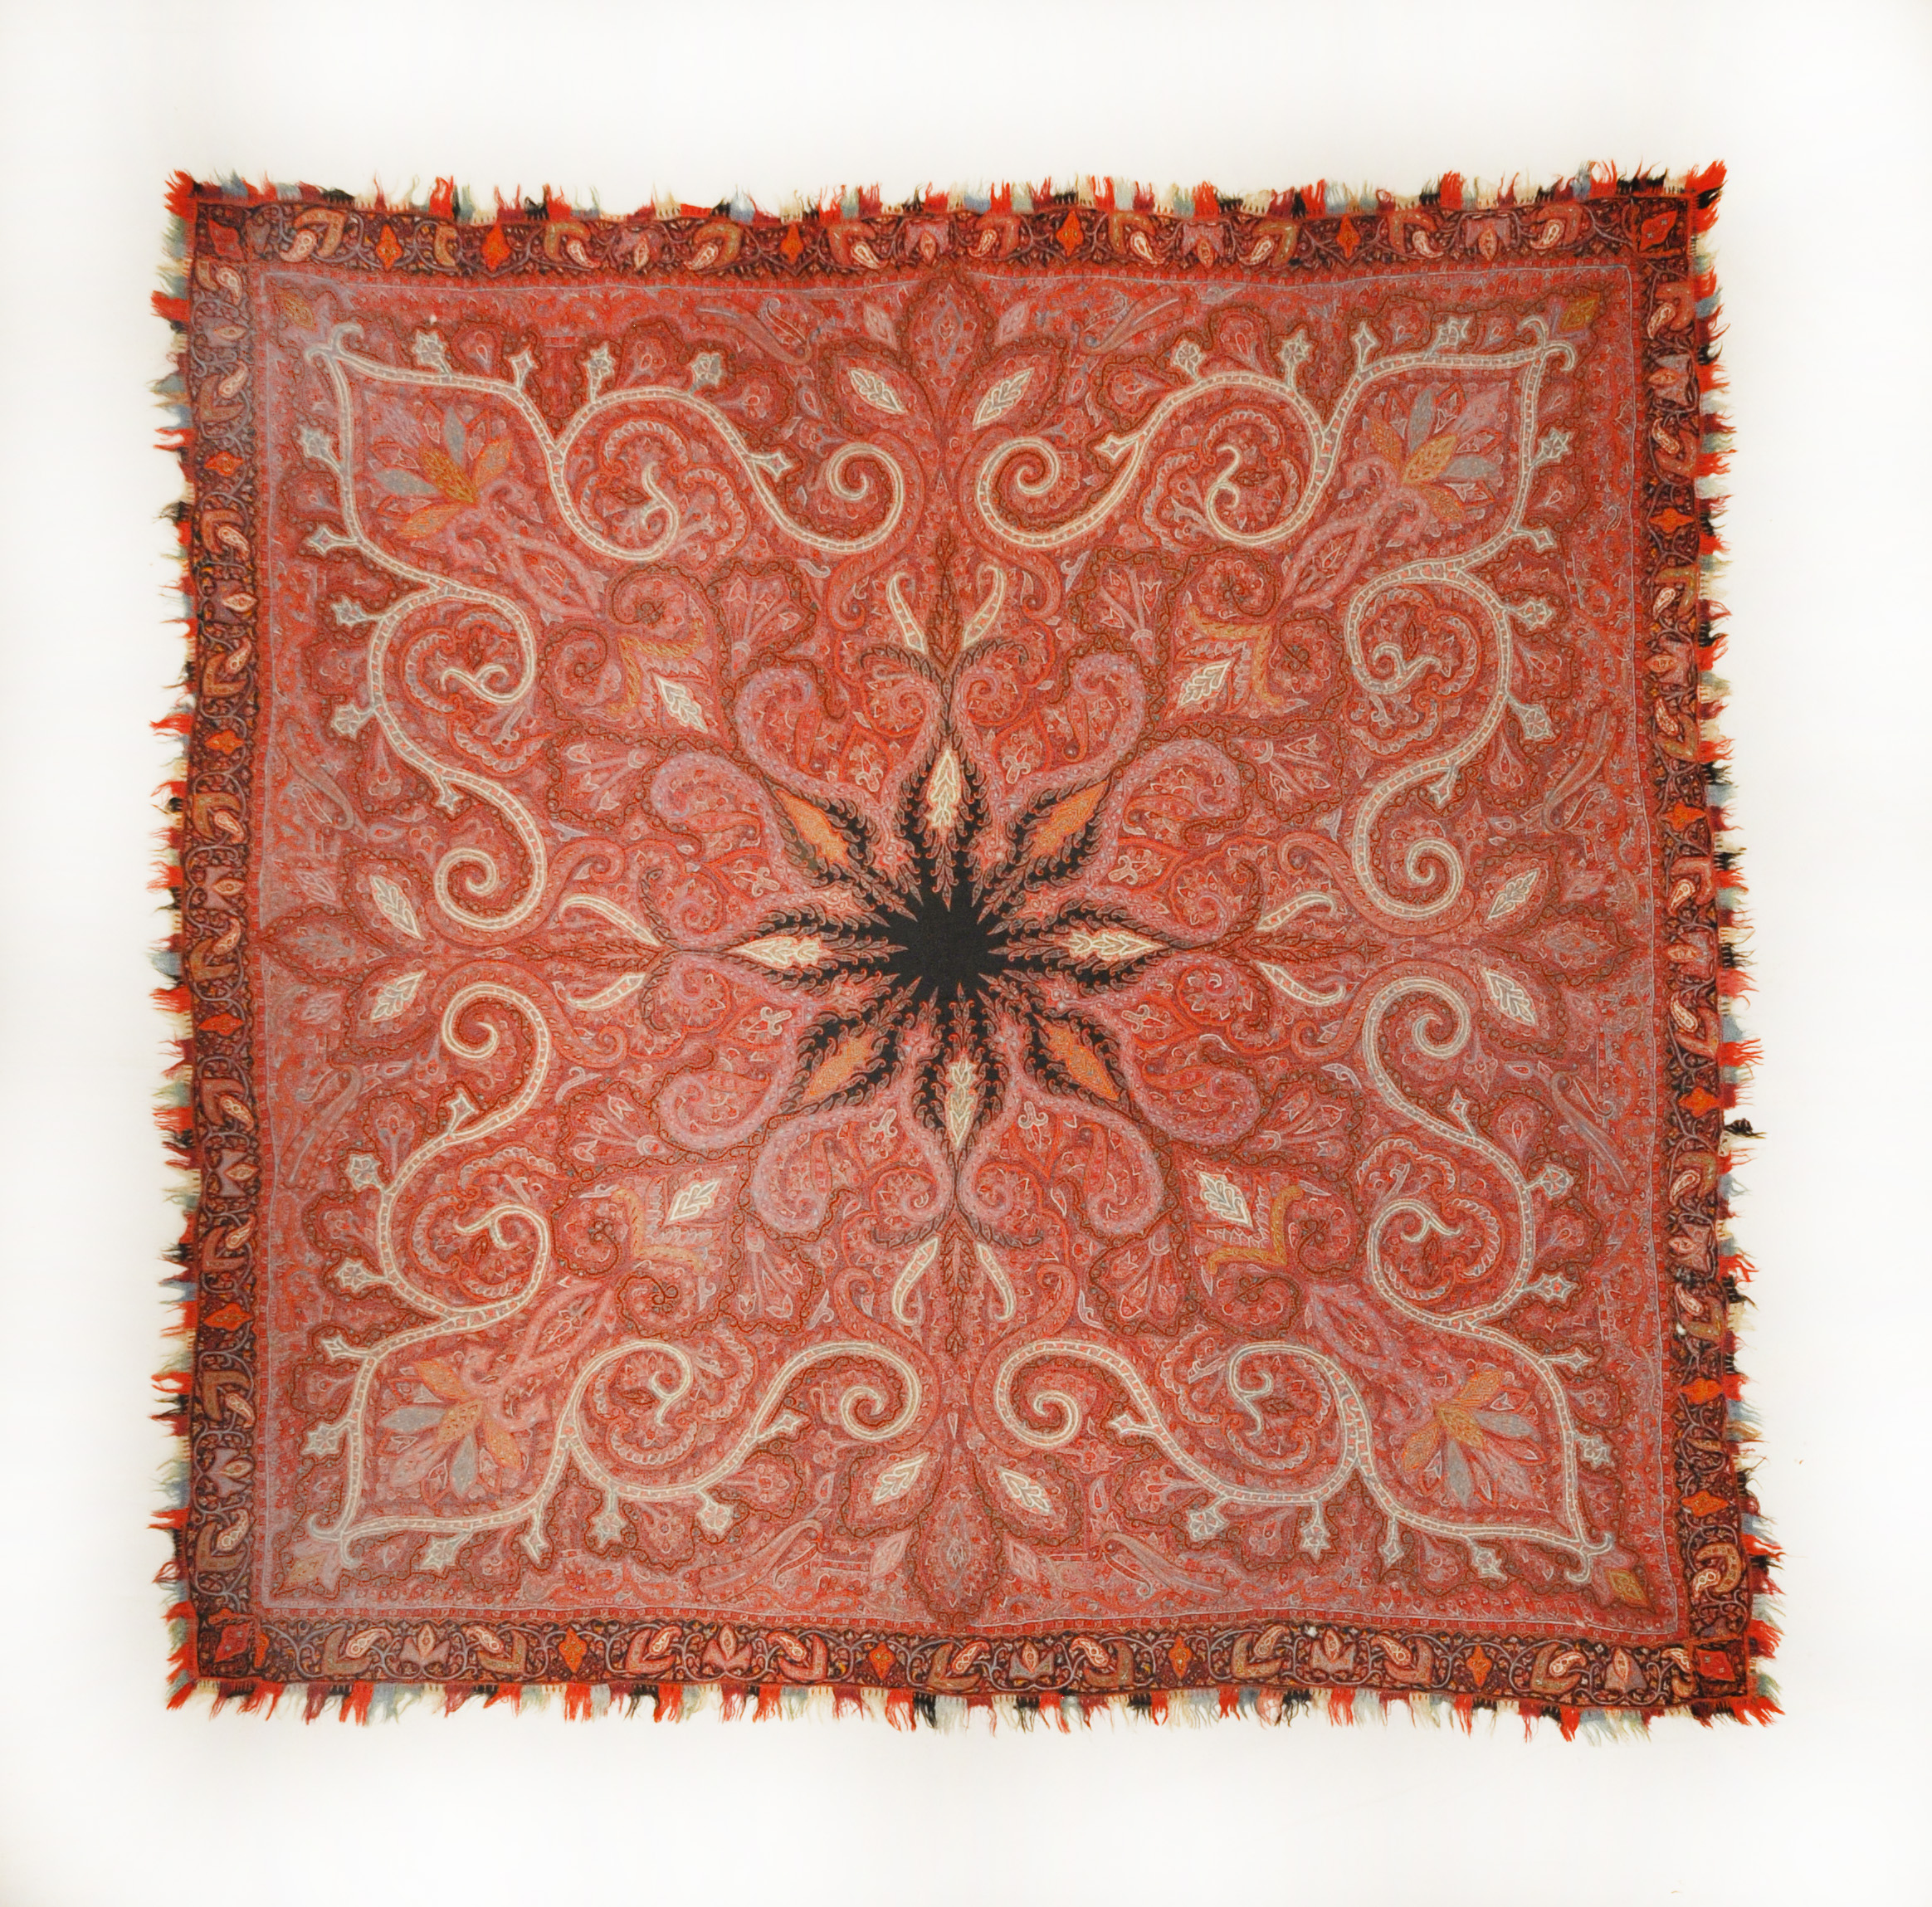 Rasht Shawl Embroidery Circa 1850